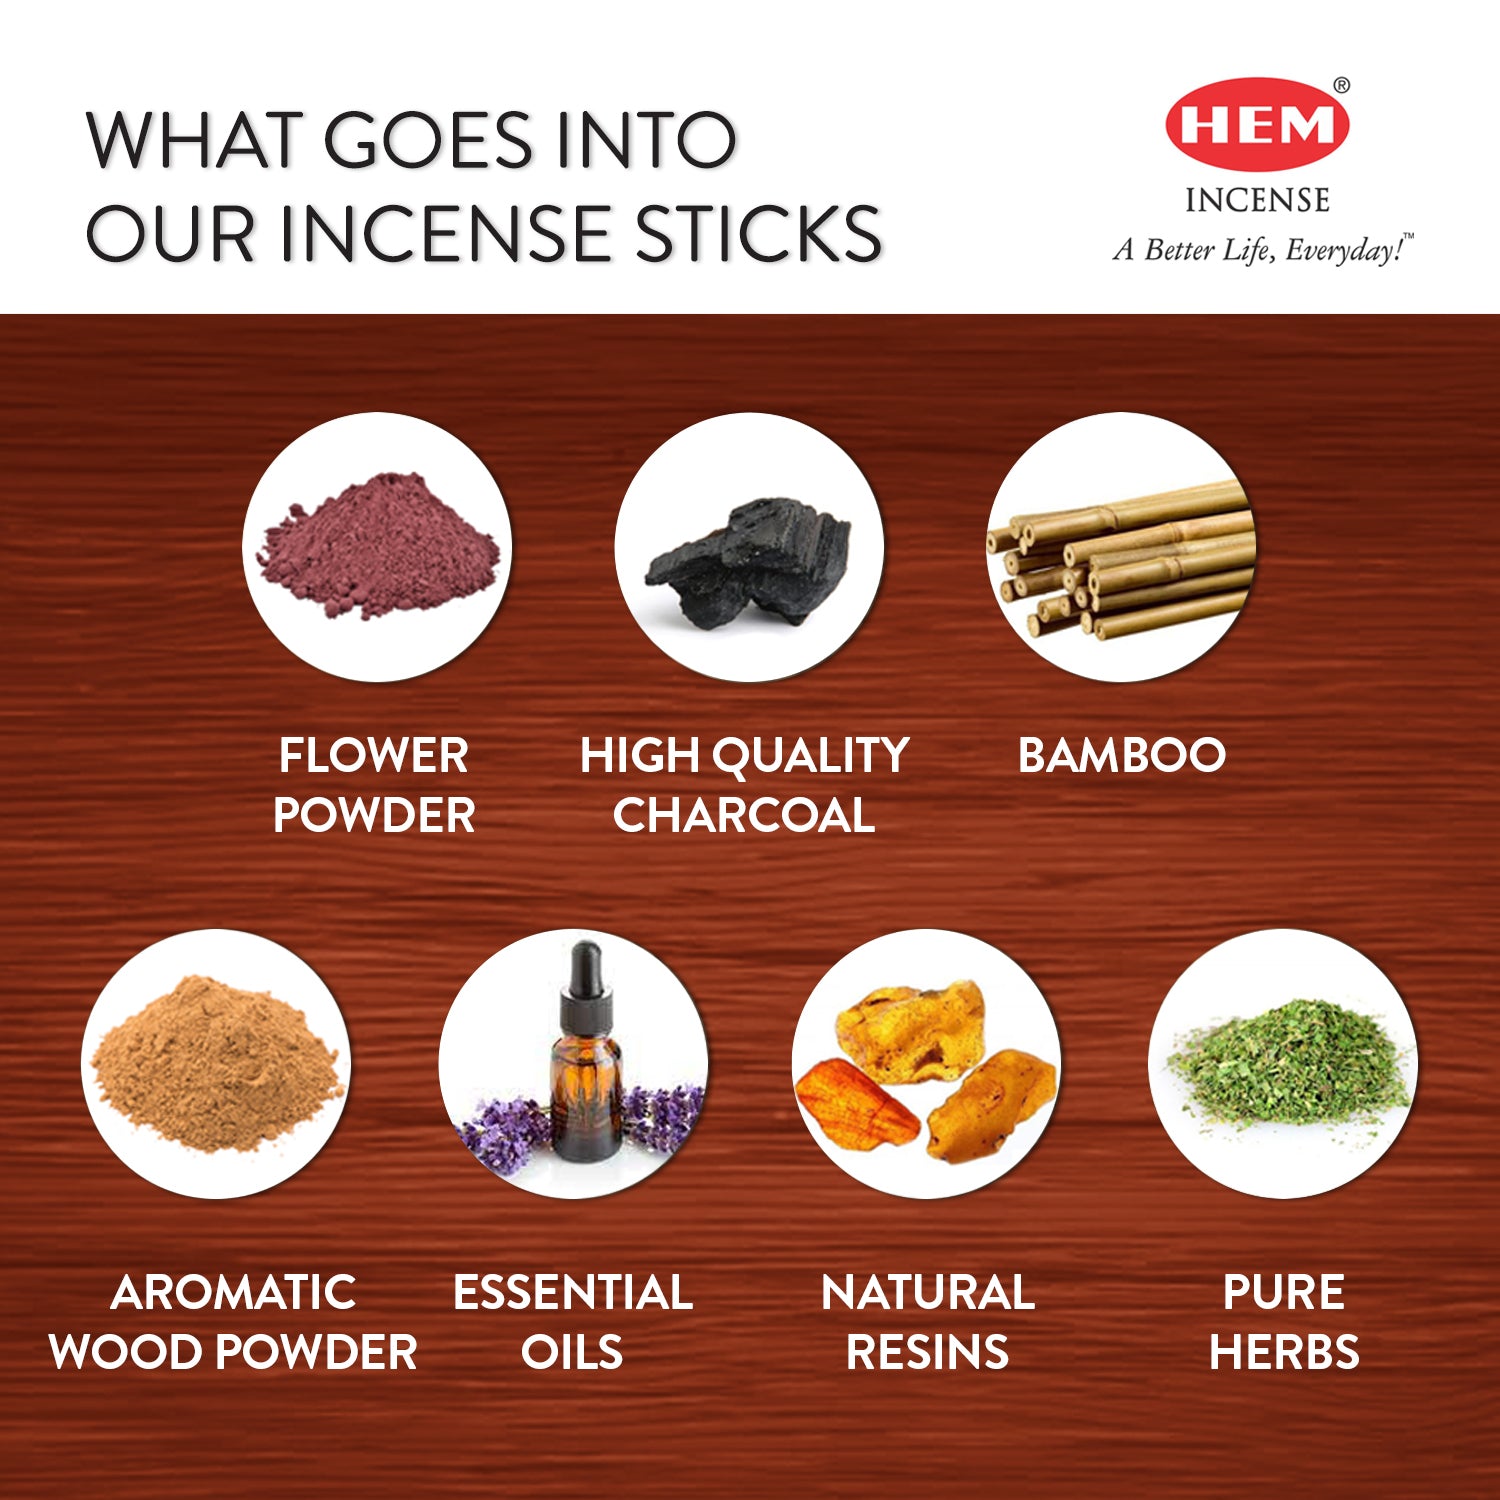 hem-devotional-series-masala-incense-sticks-ingredients